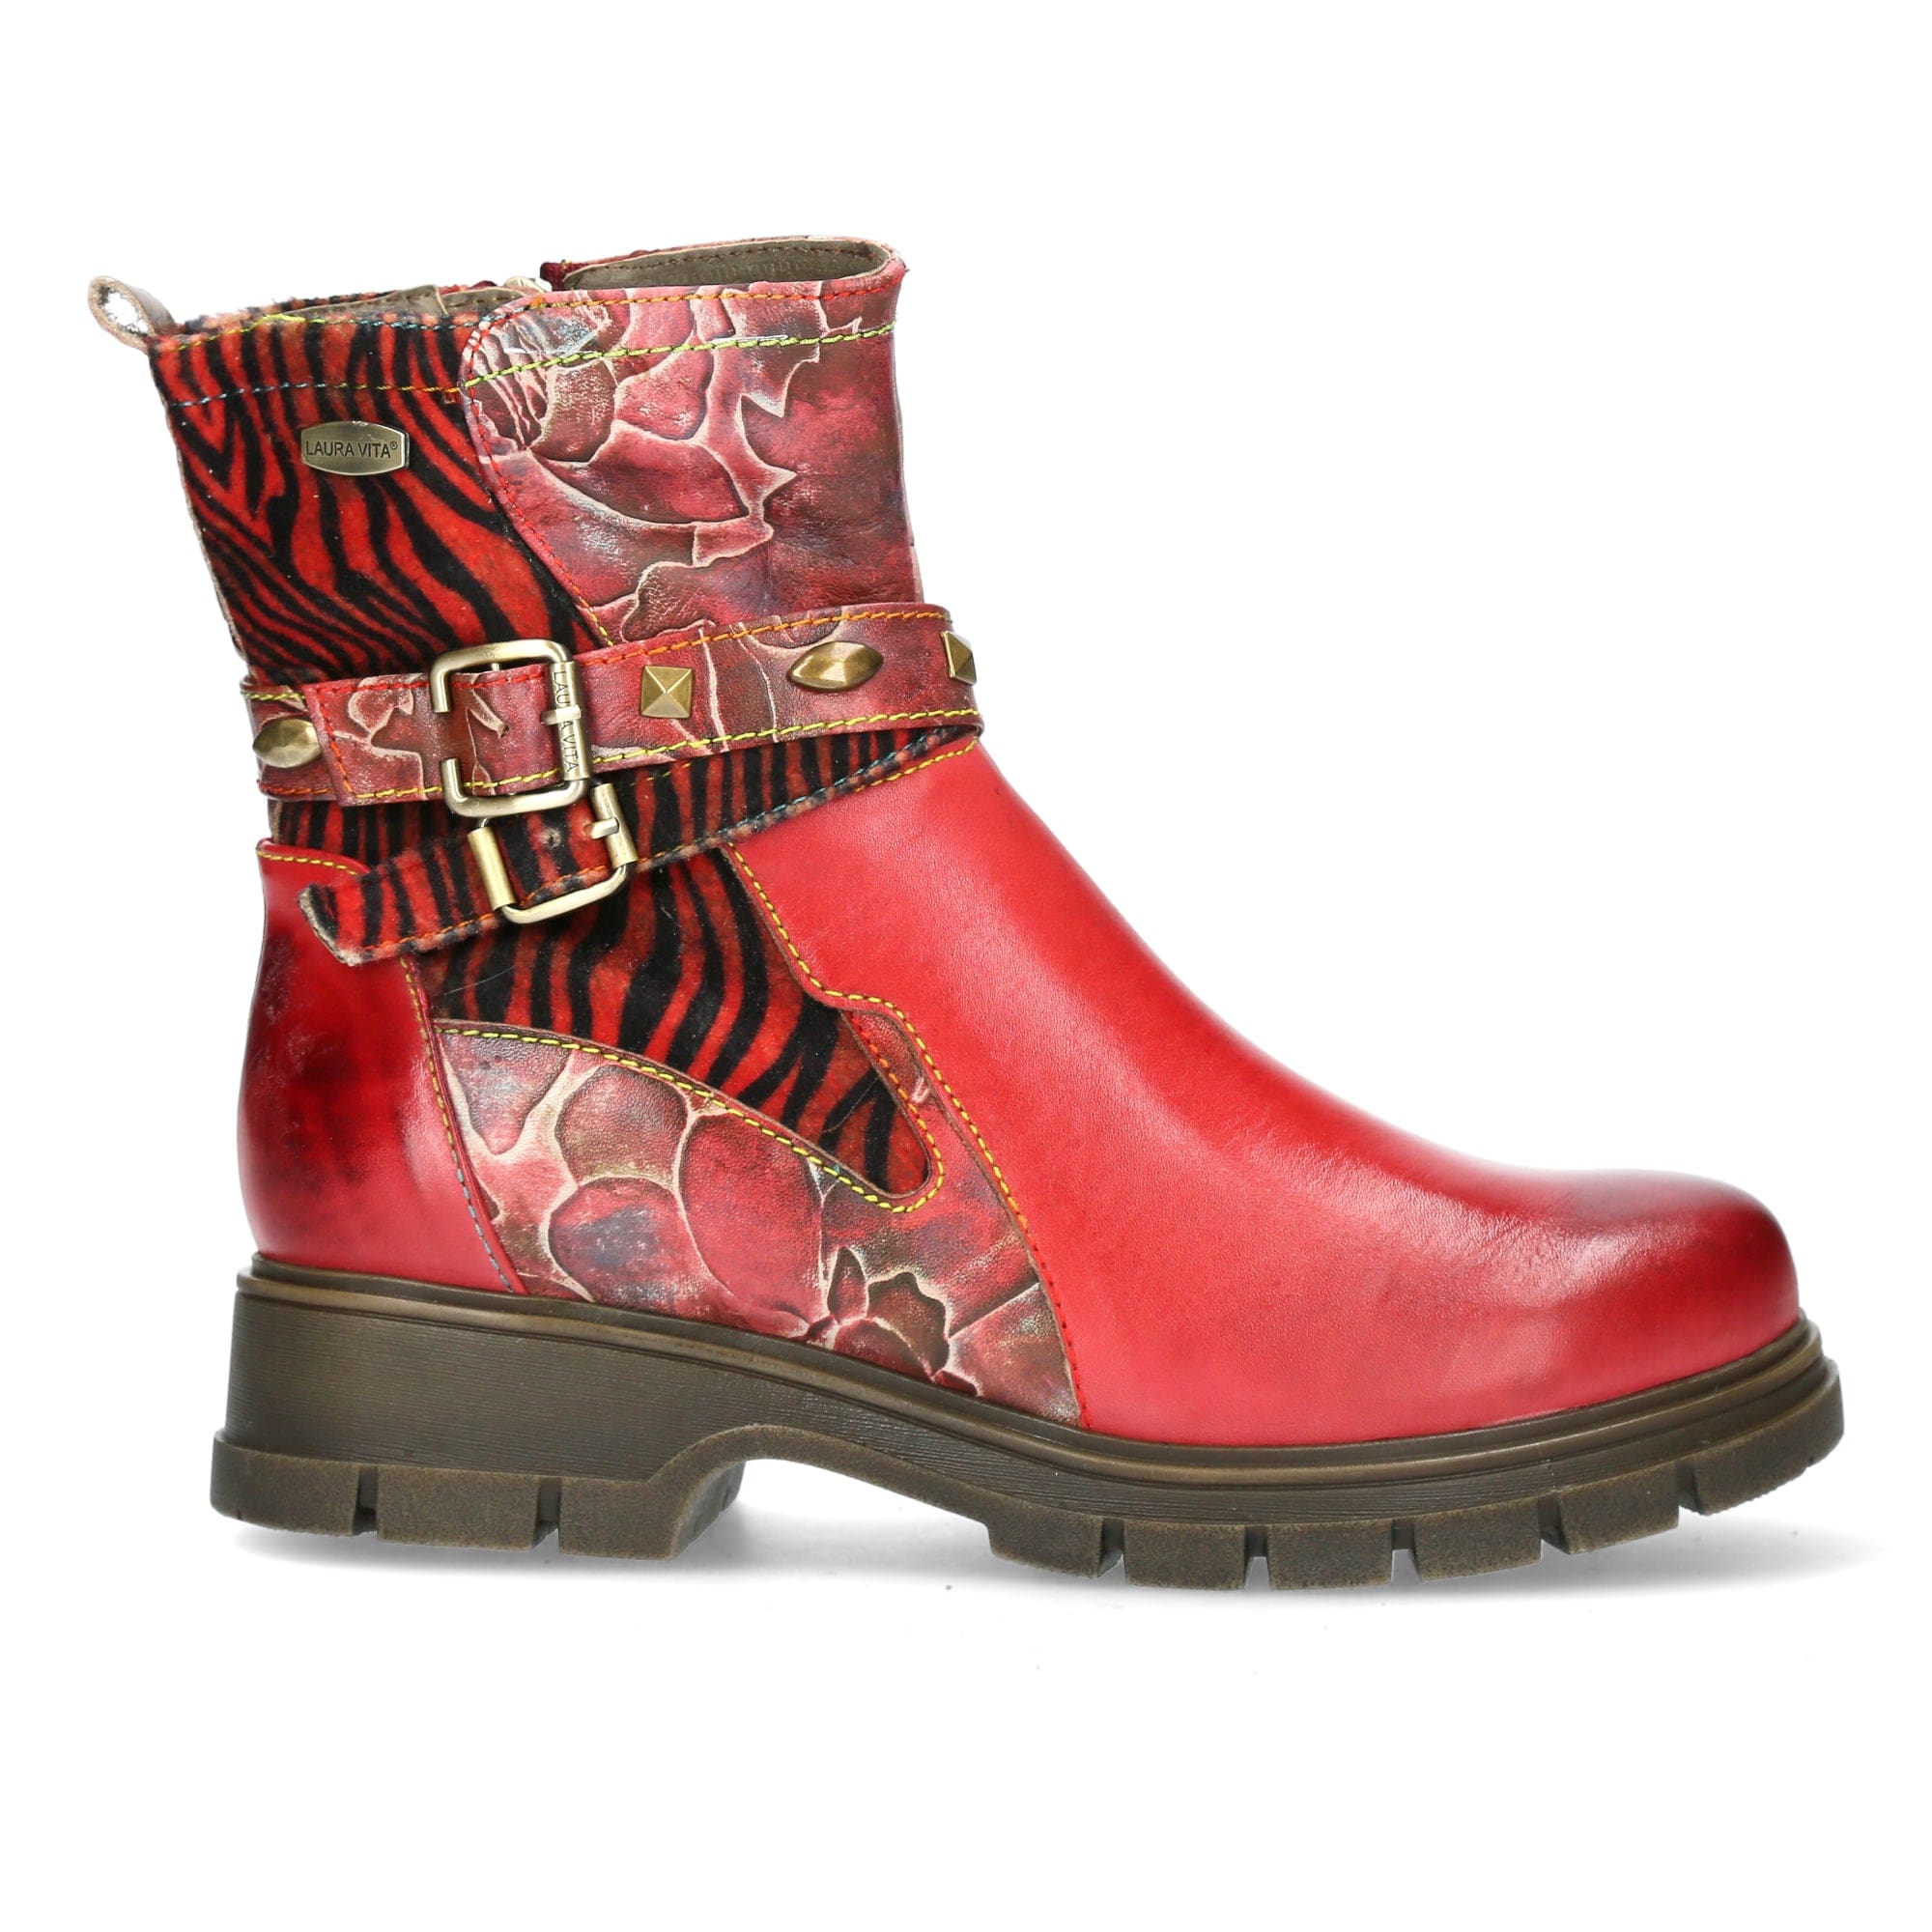 KAELAO 01 - 35 / Garnet - Boots